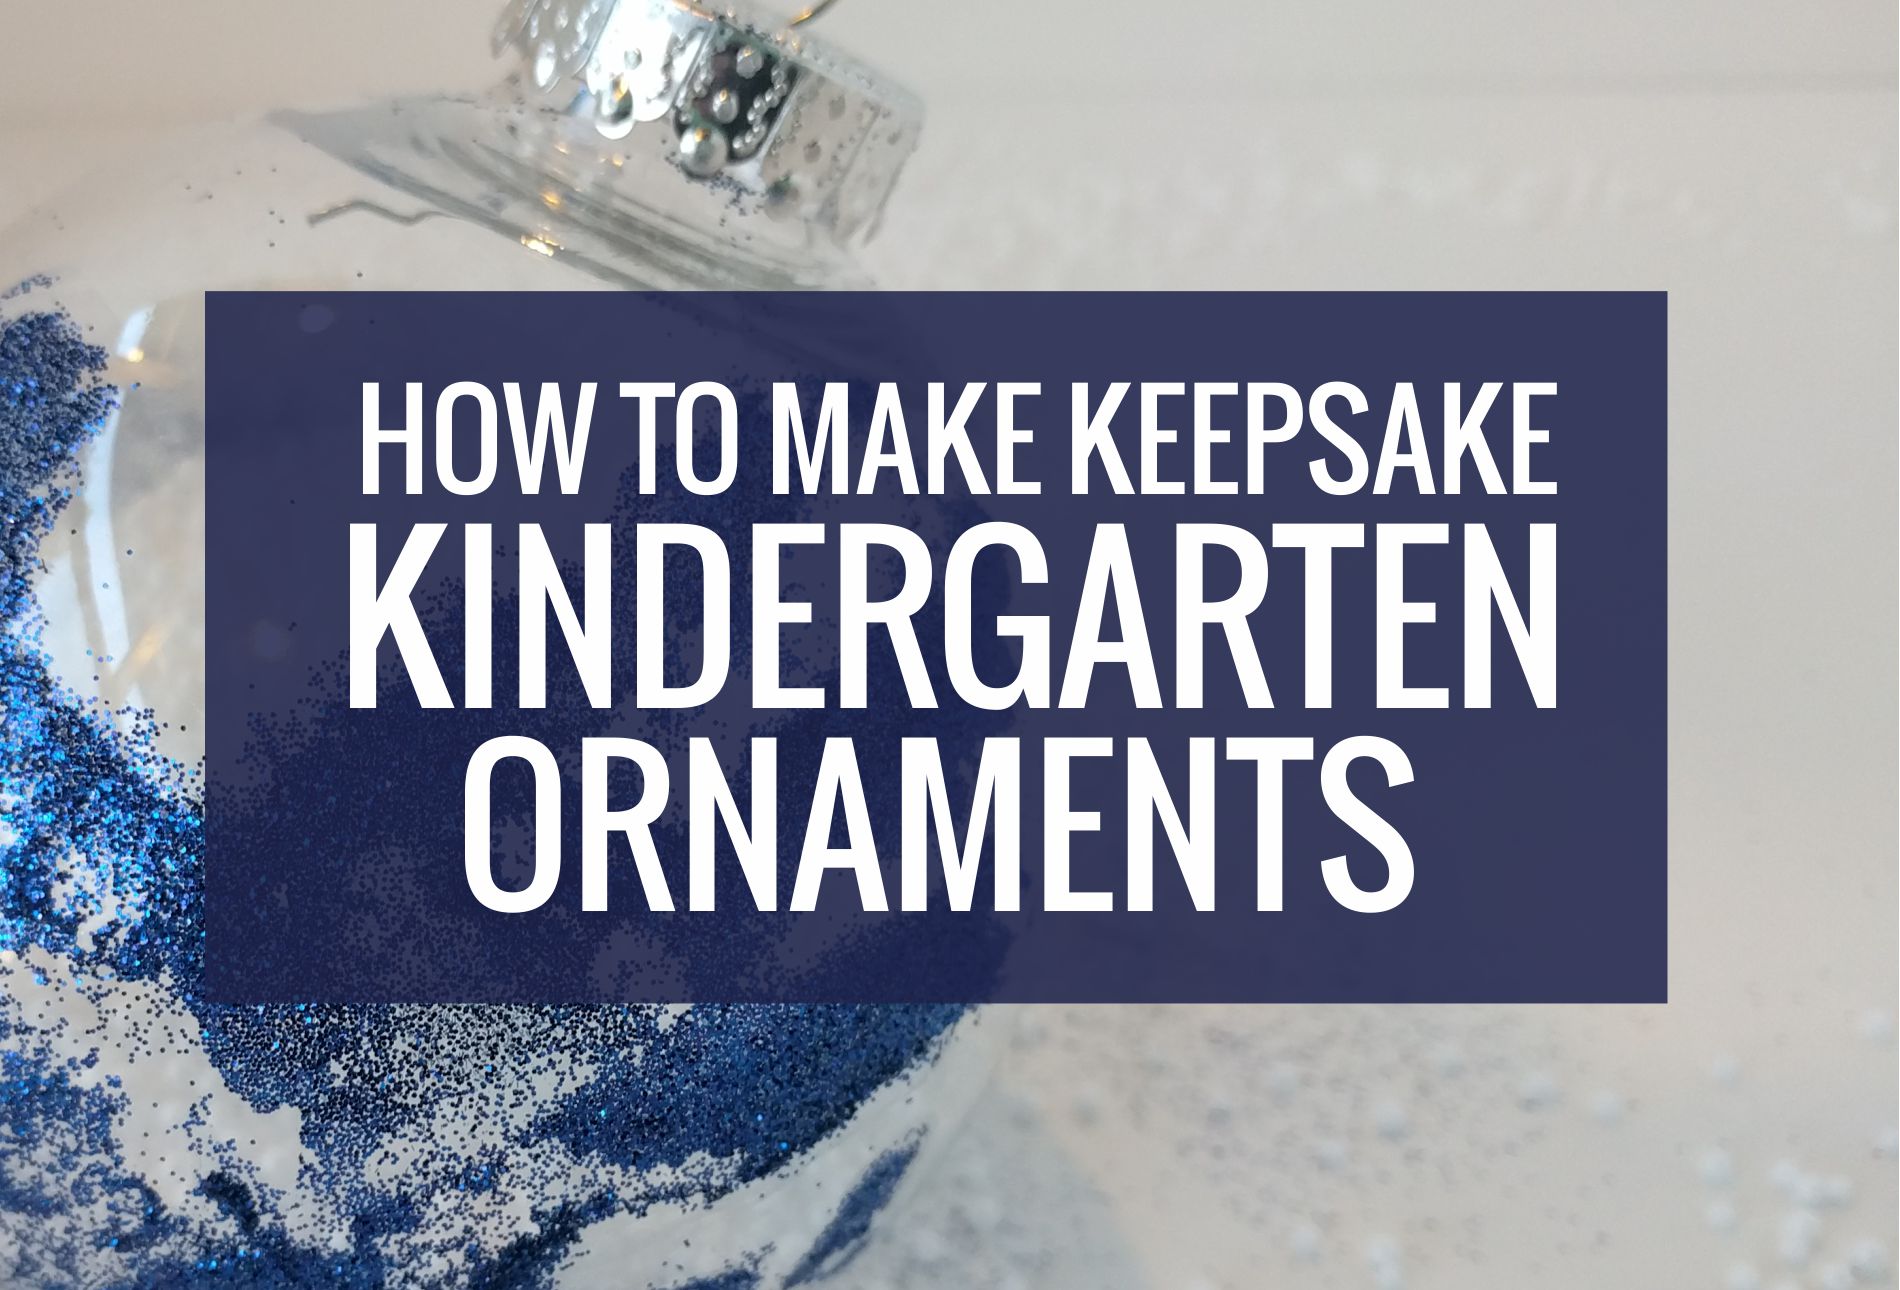 How to Make Keepsake Kindergarten Ornaments